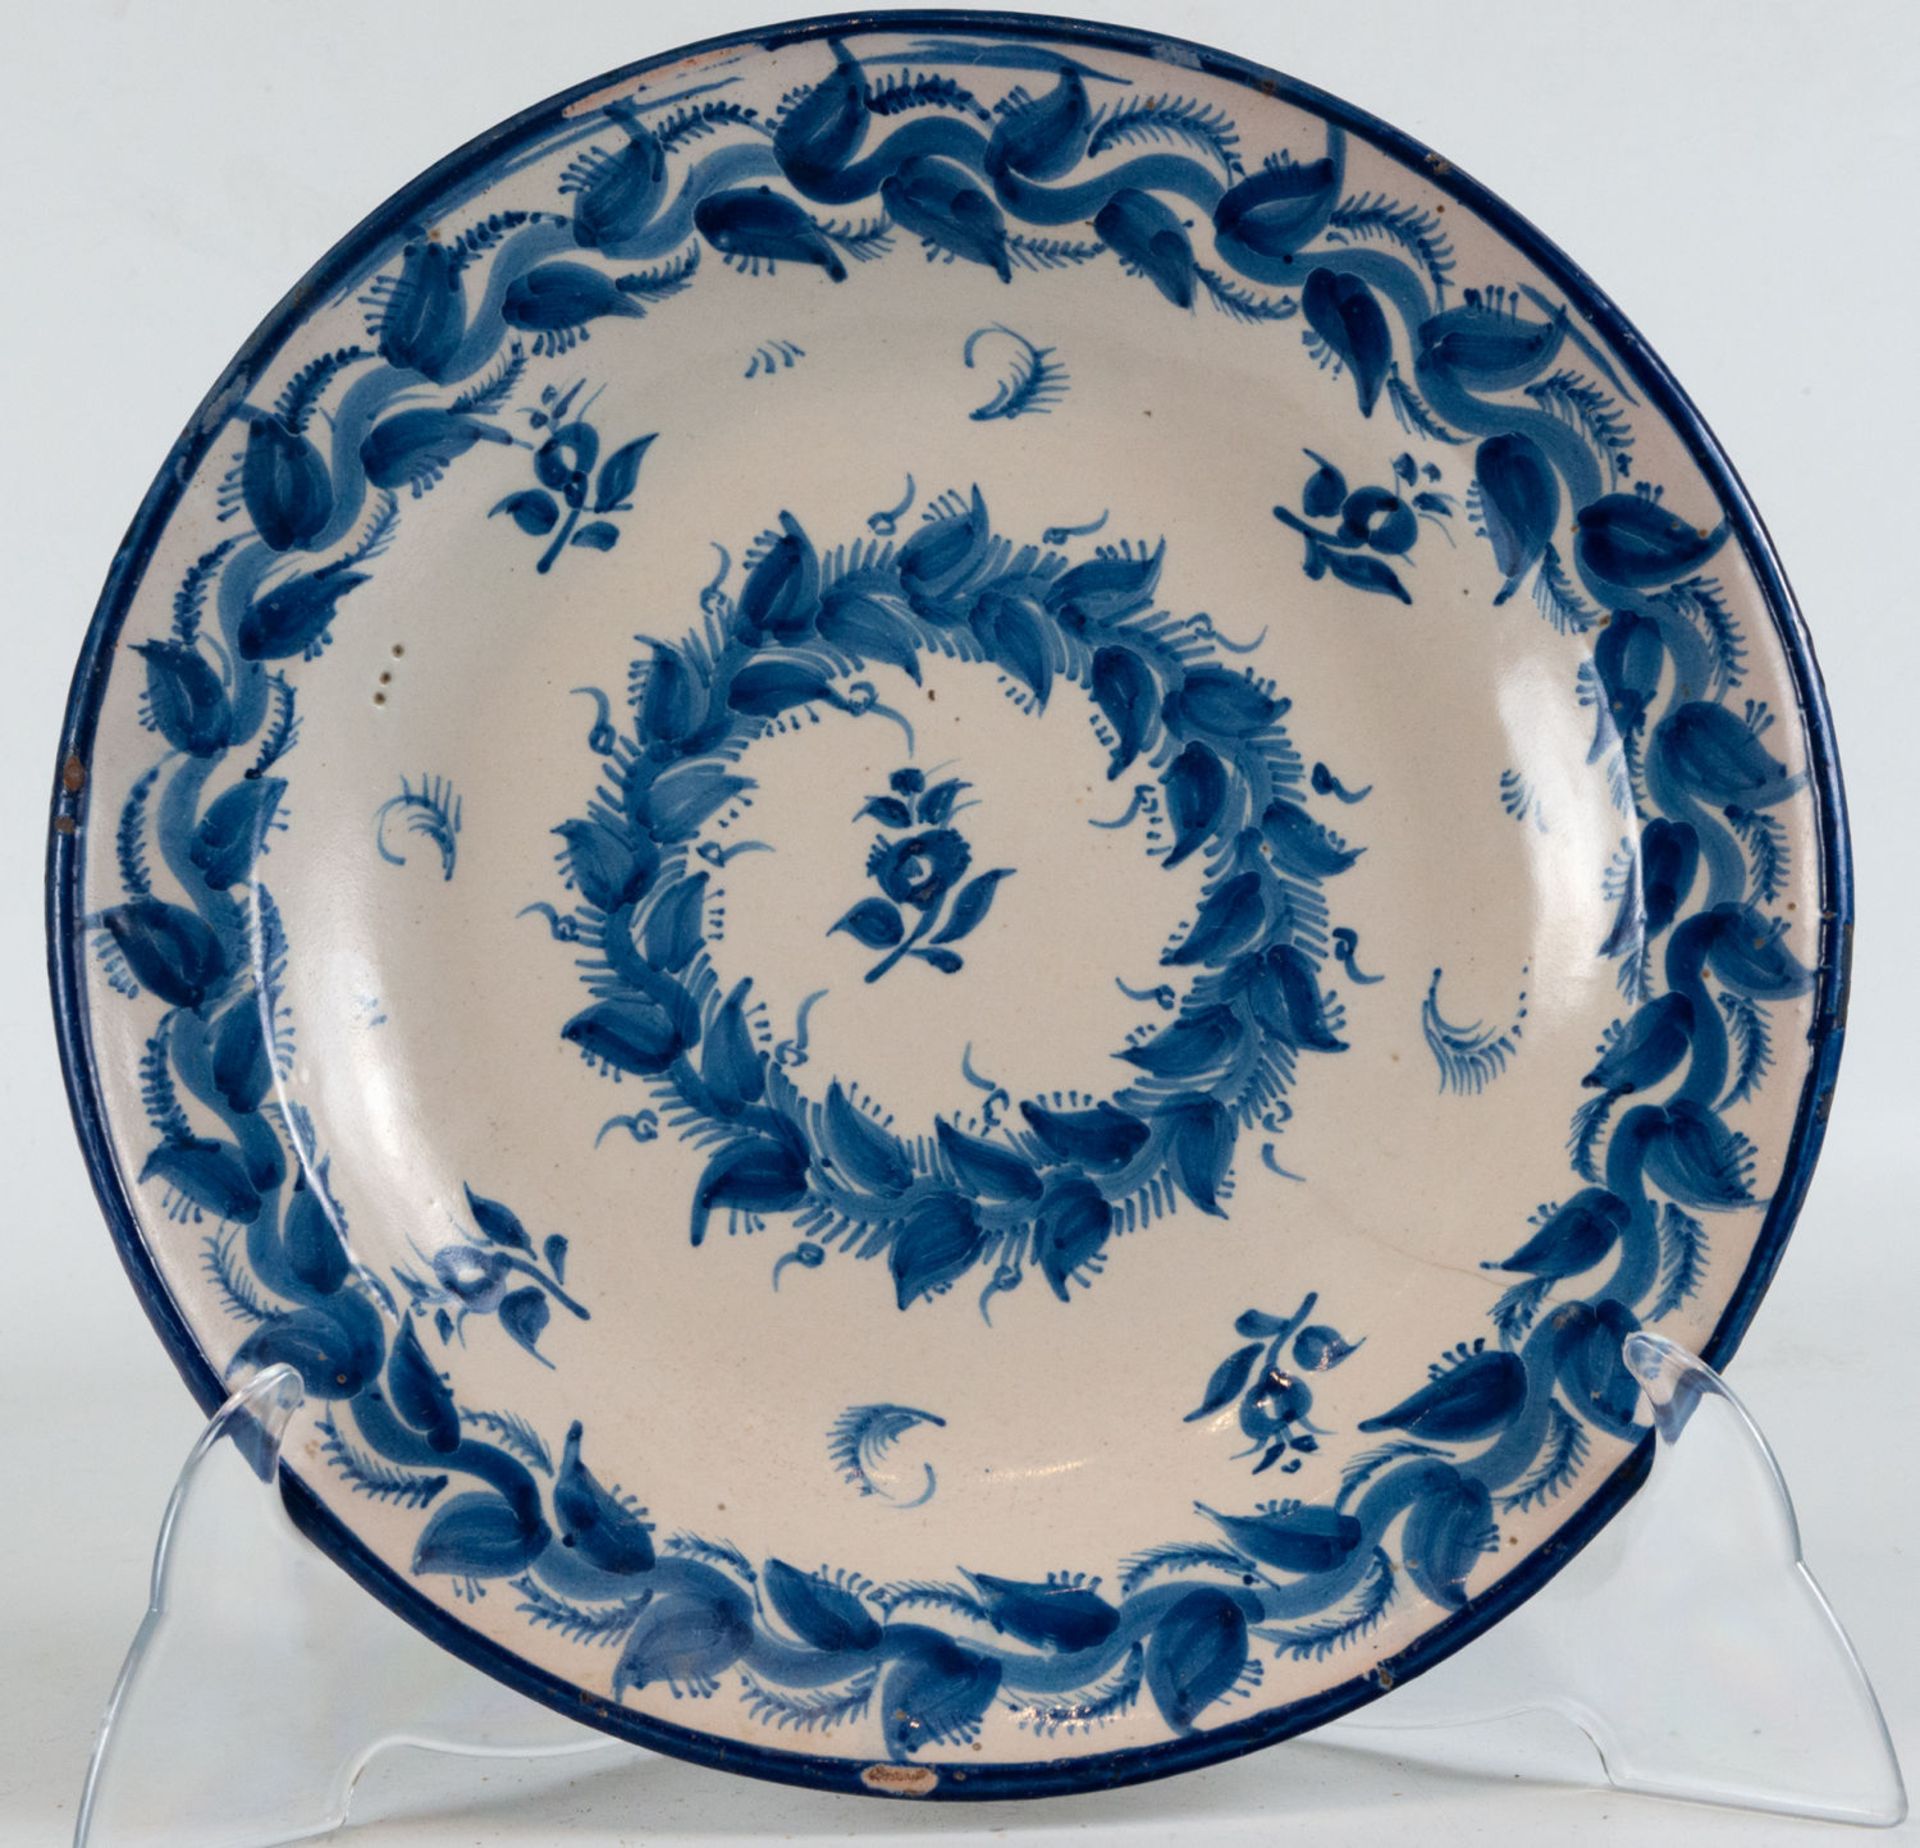 Cobalt blue ceramic plate from Manises, 20th century